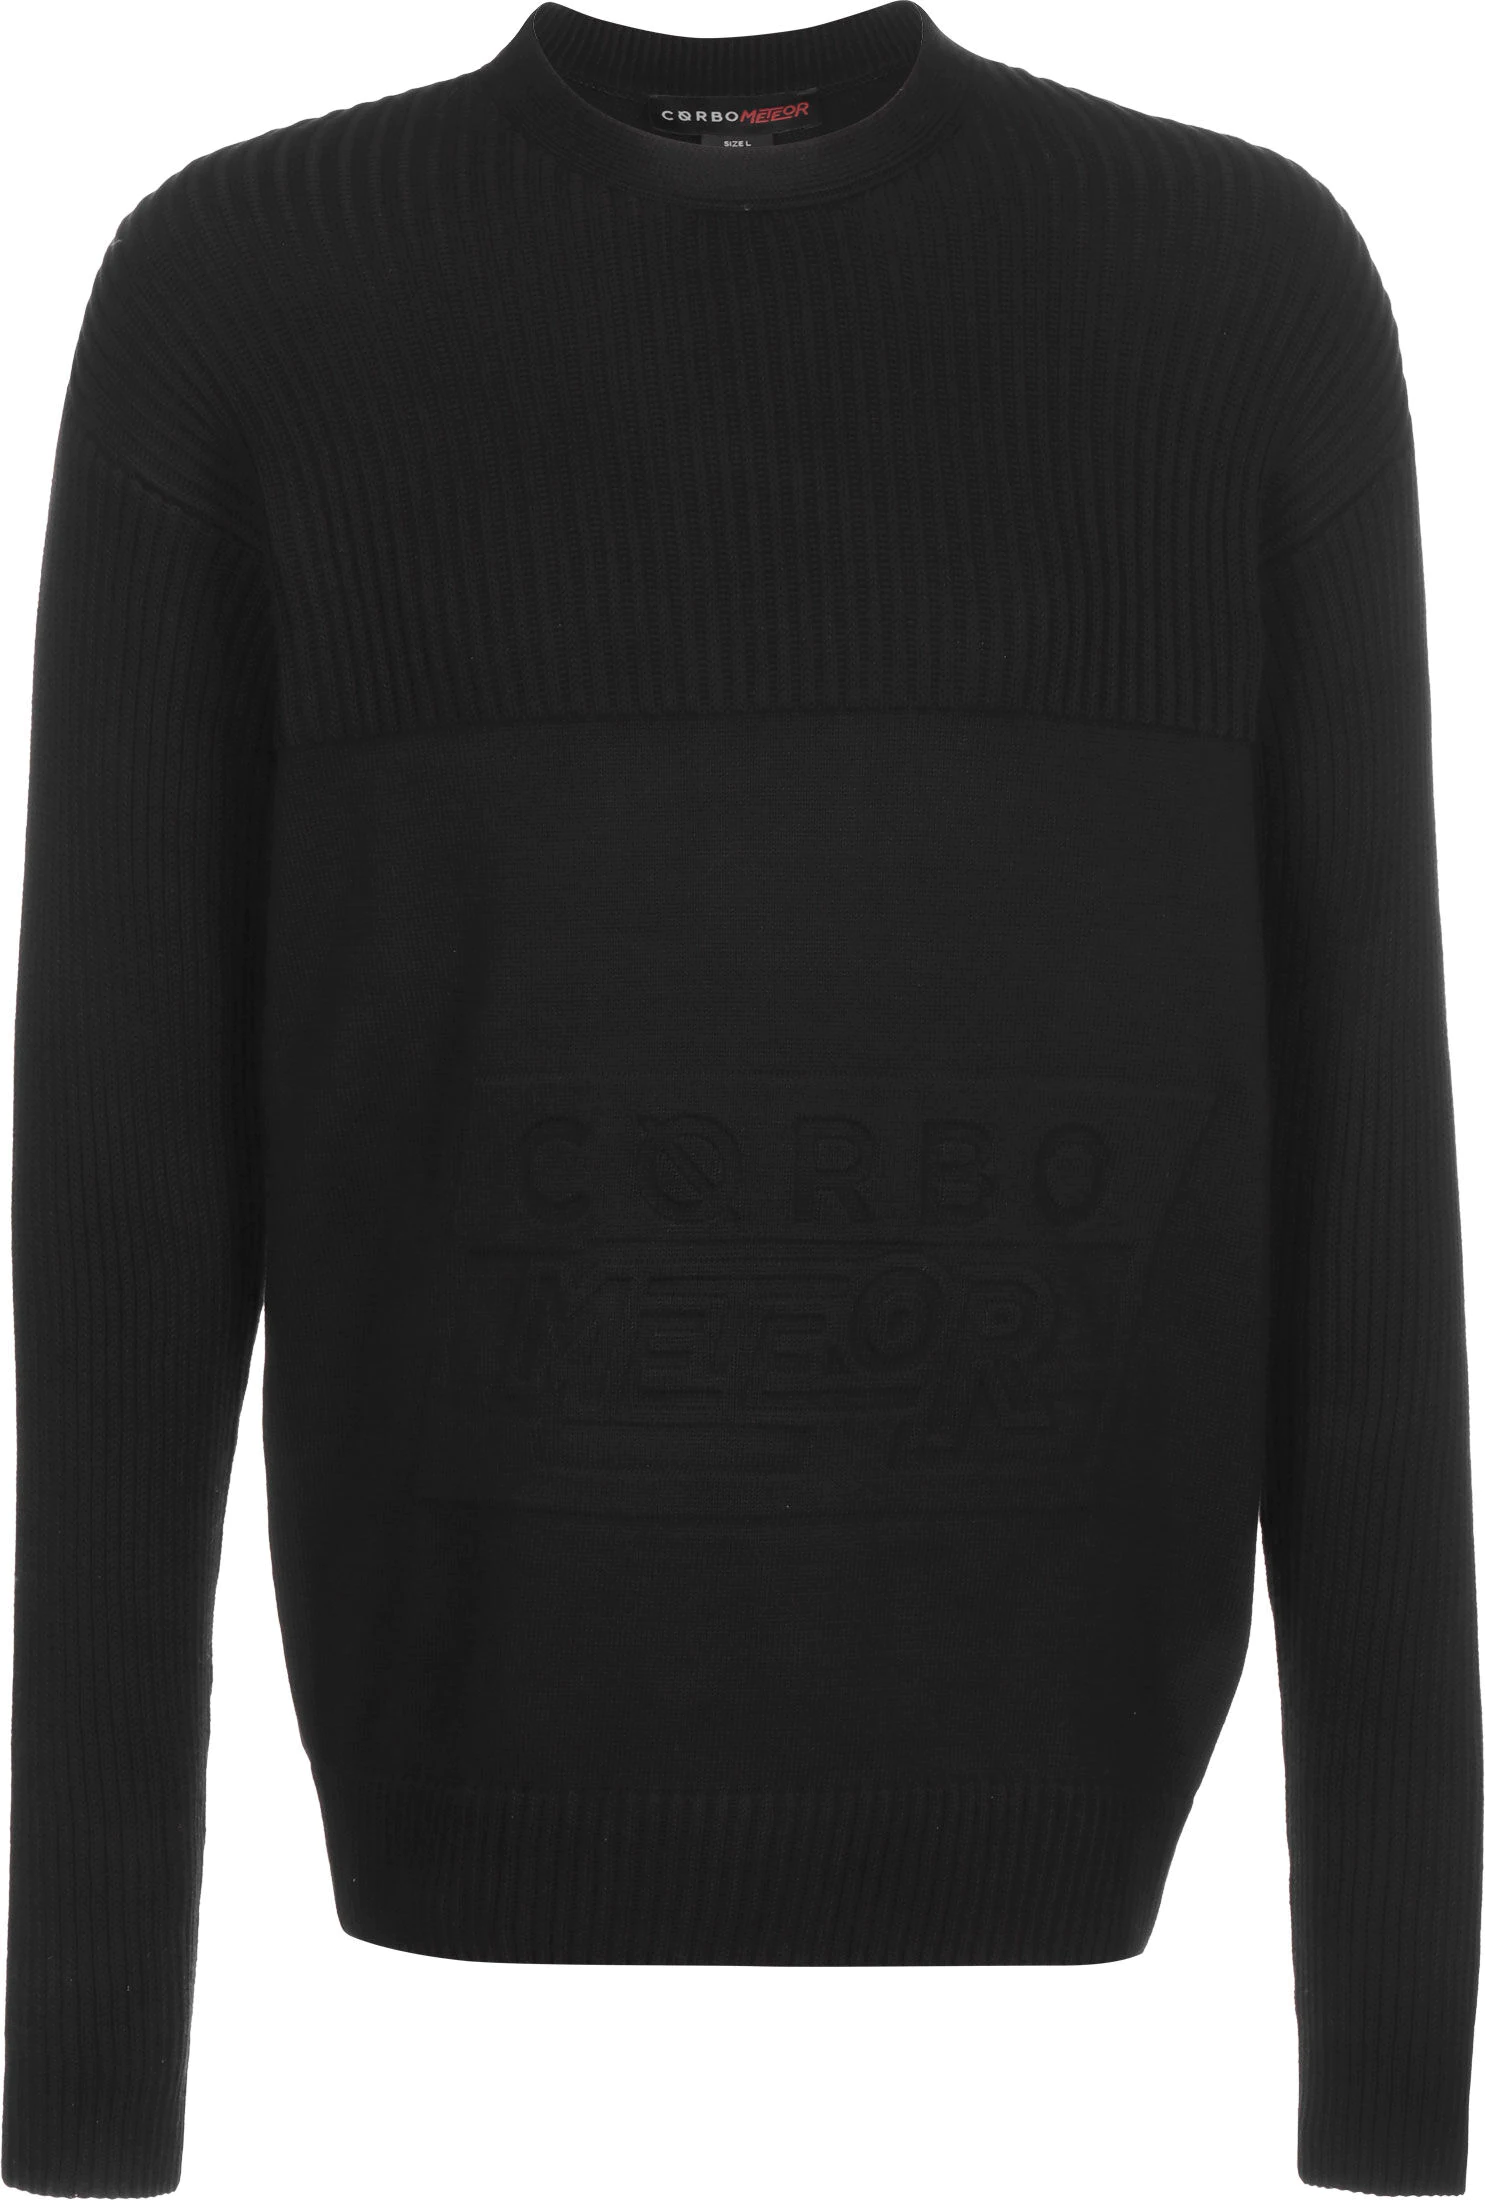 Corbo Sweater Meteor